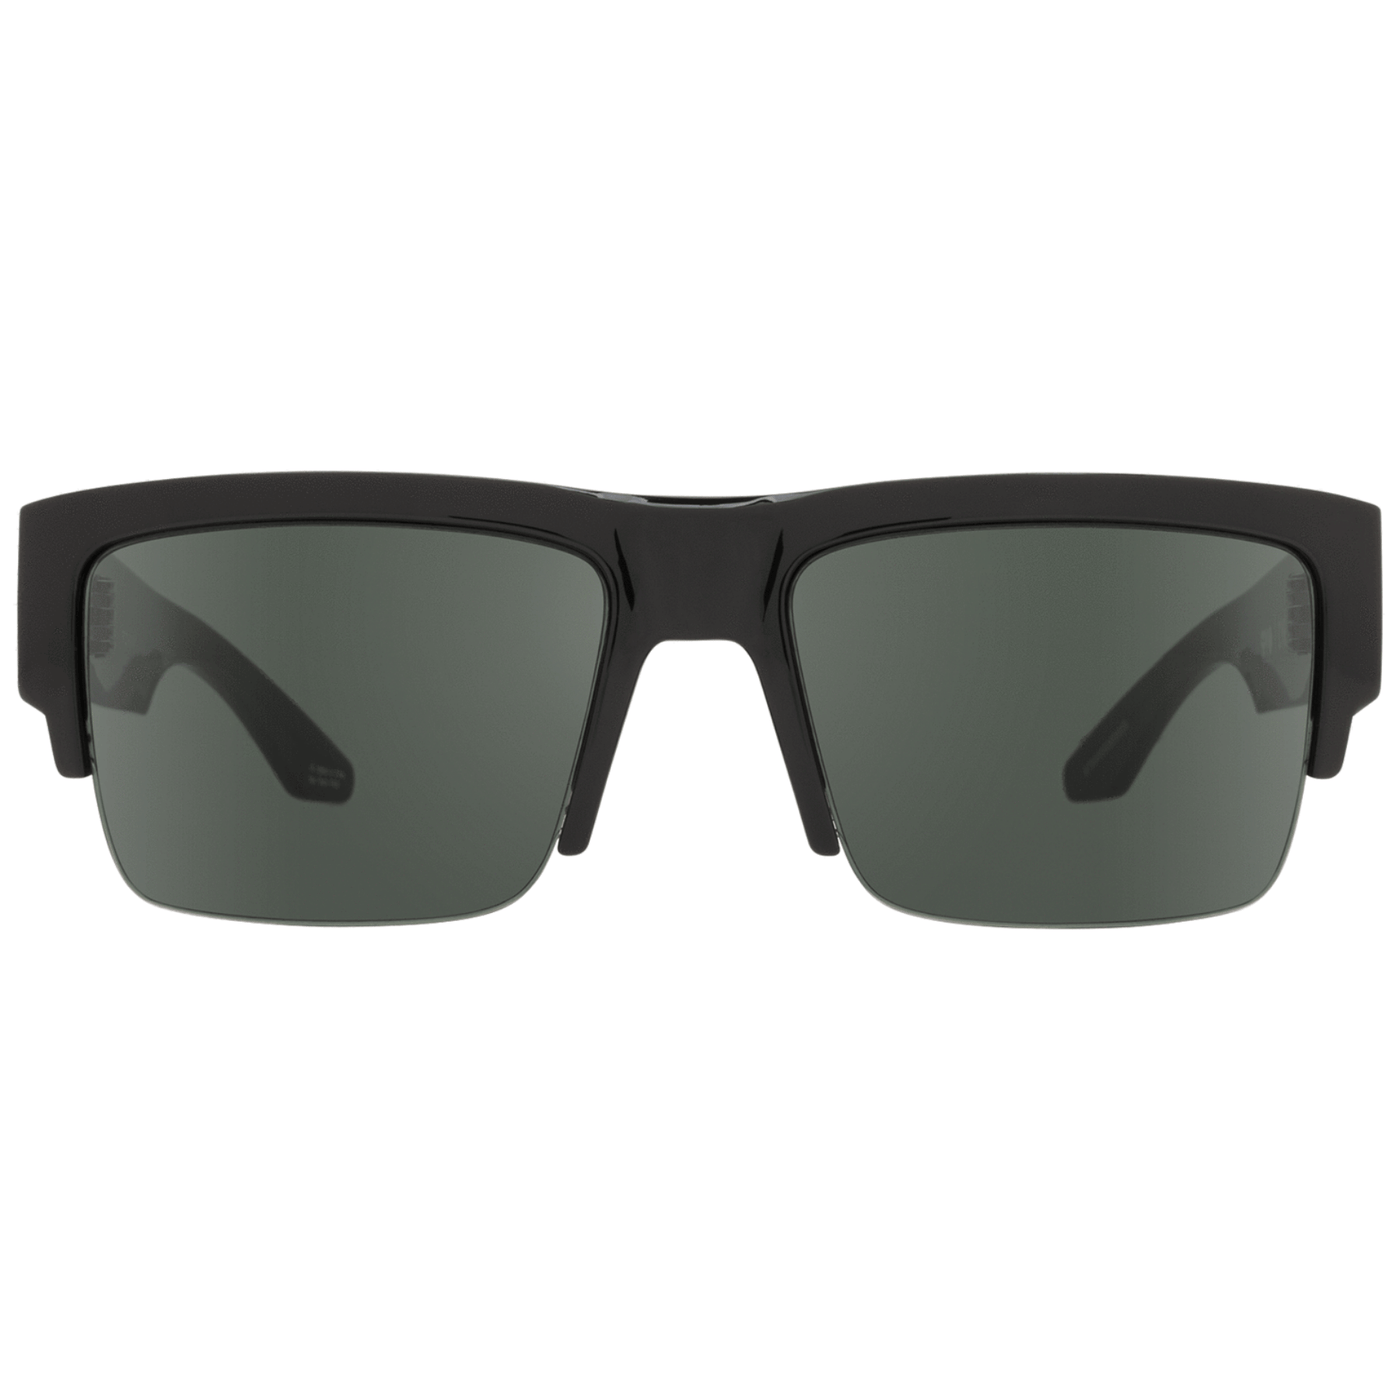 black semi-rimless sunglasses